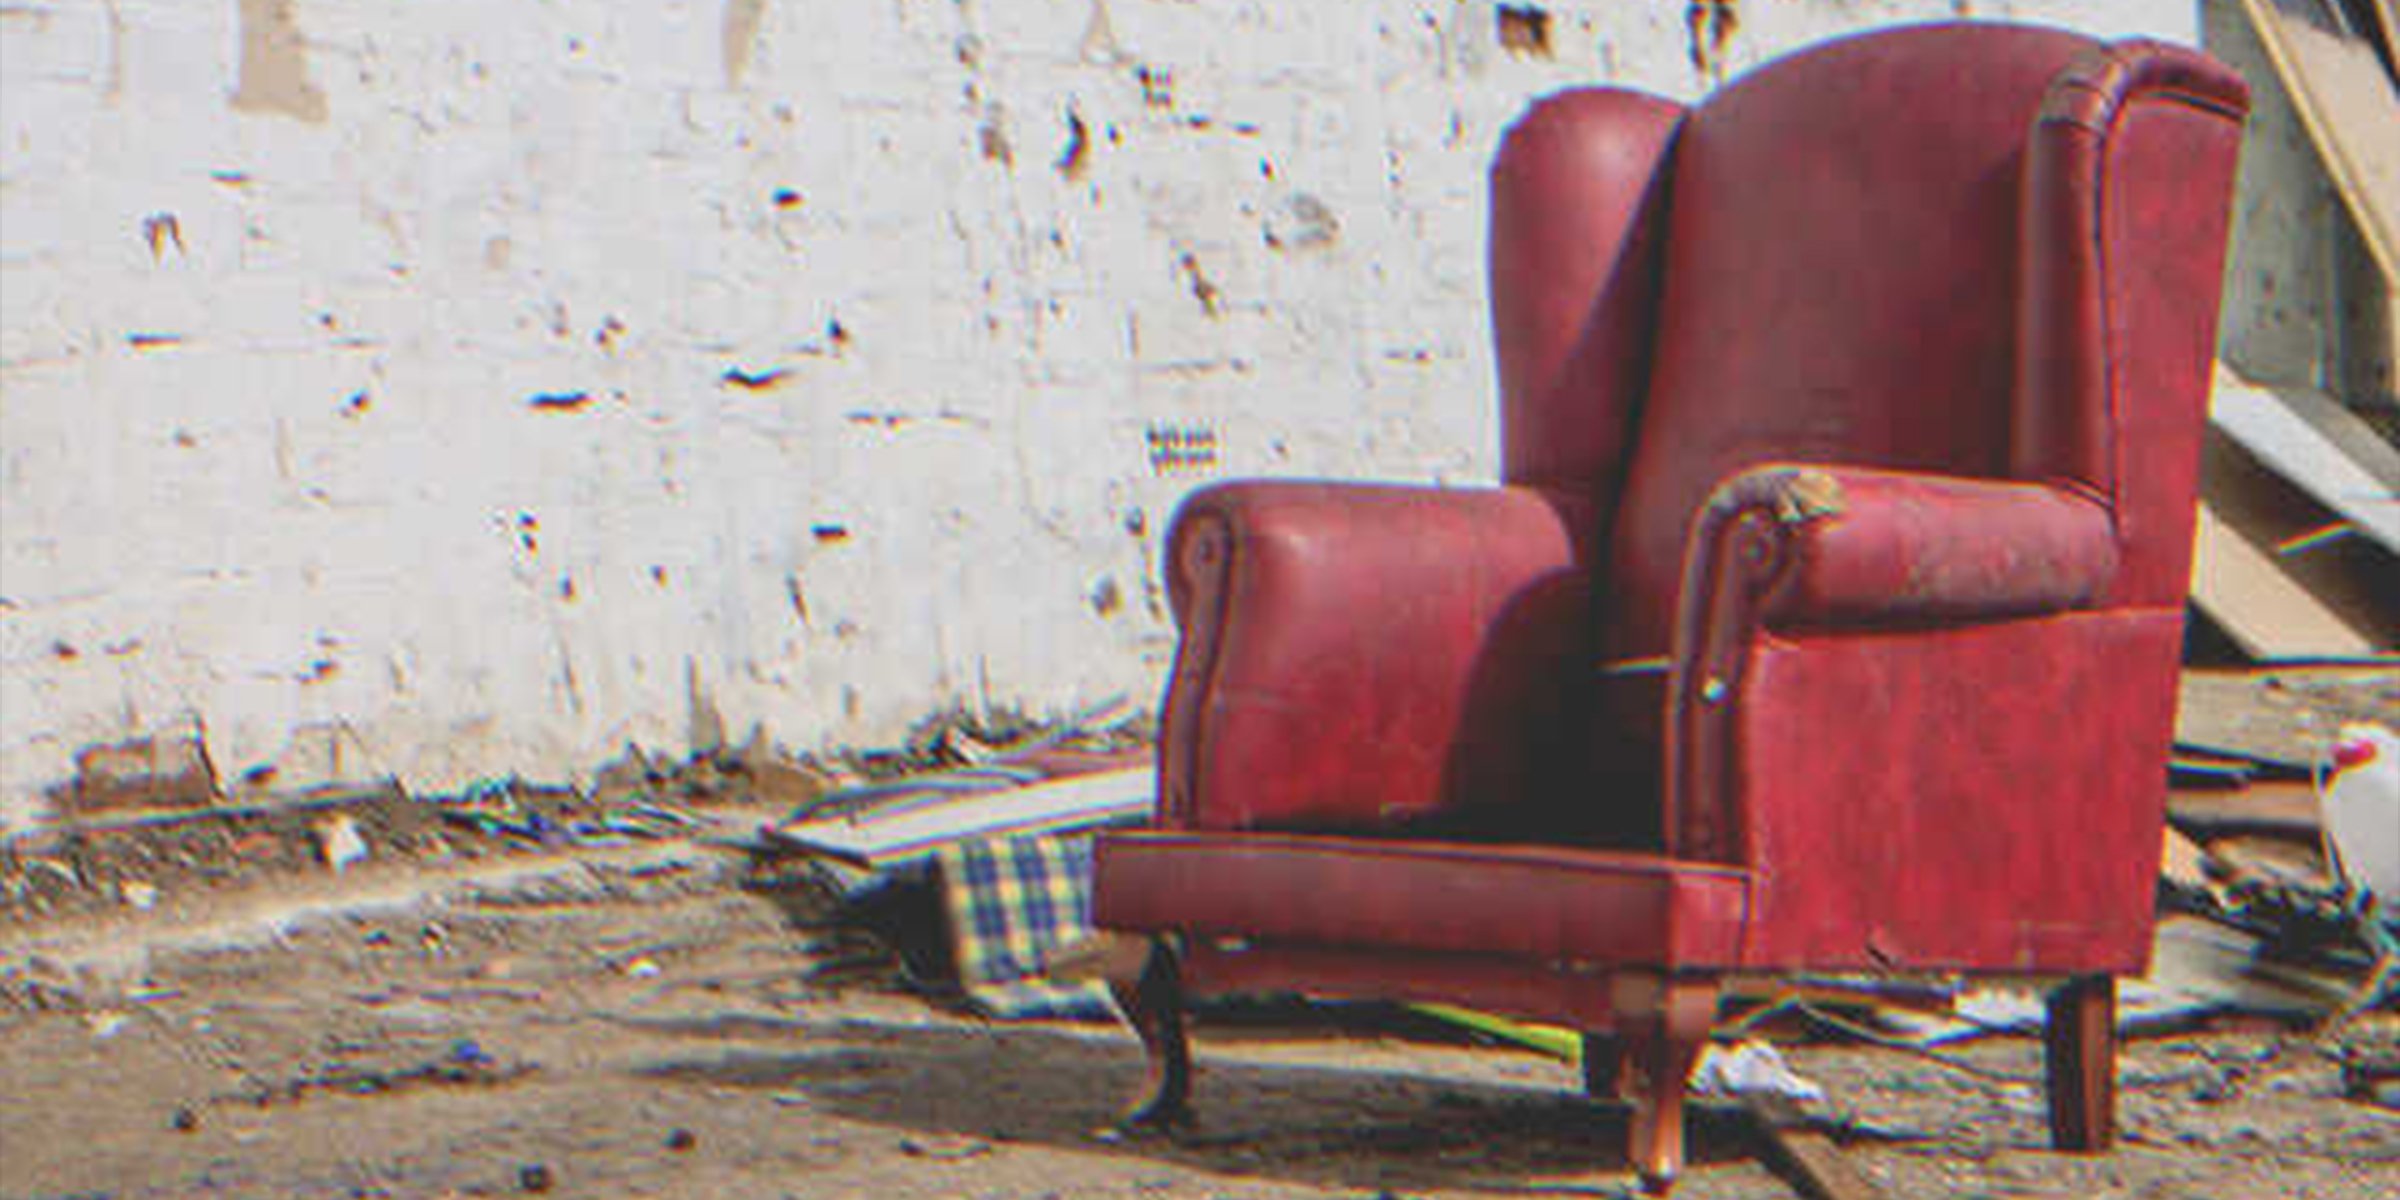 Un sillón en la calle | Foto: Shutterstock